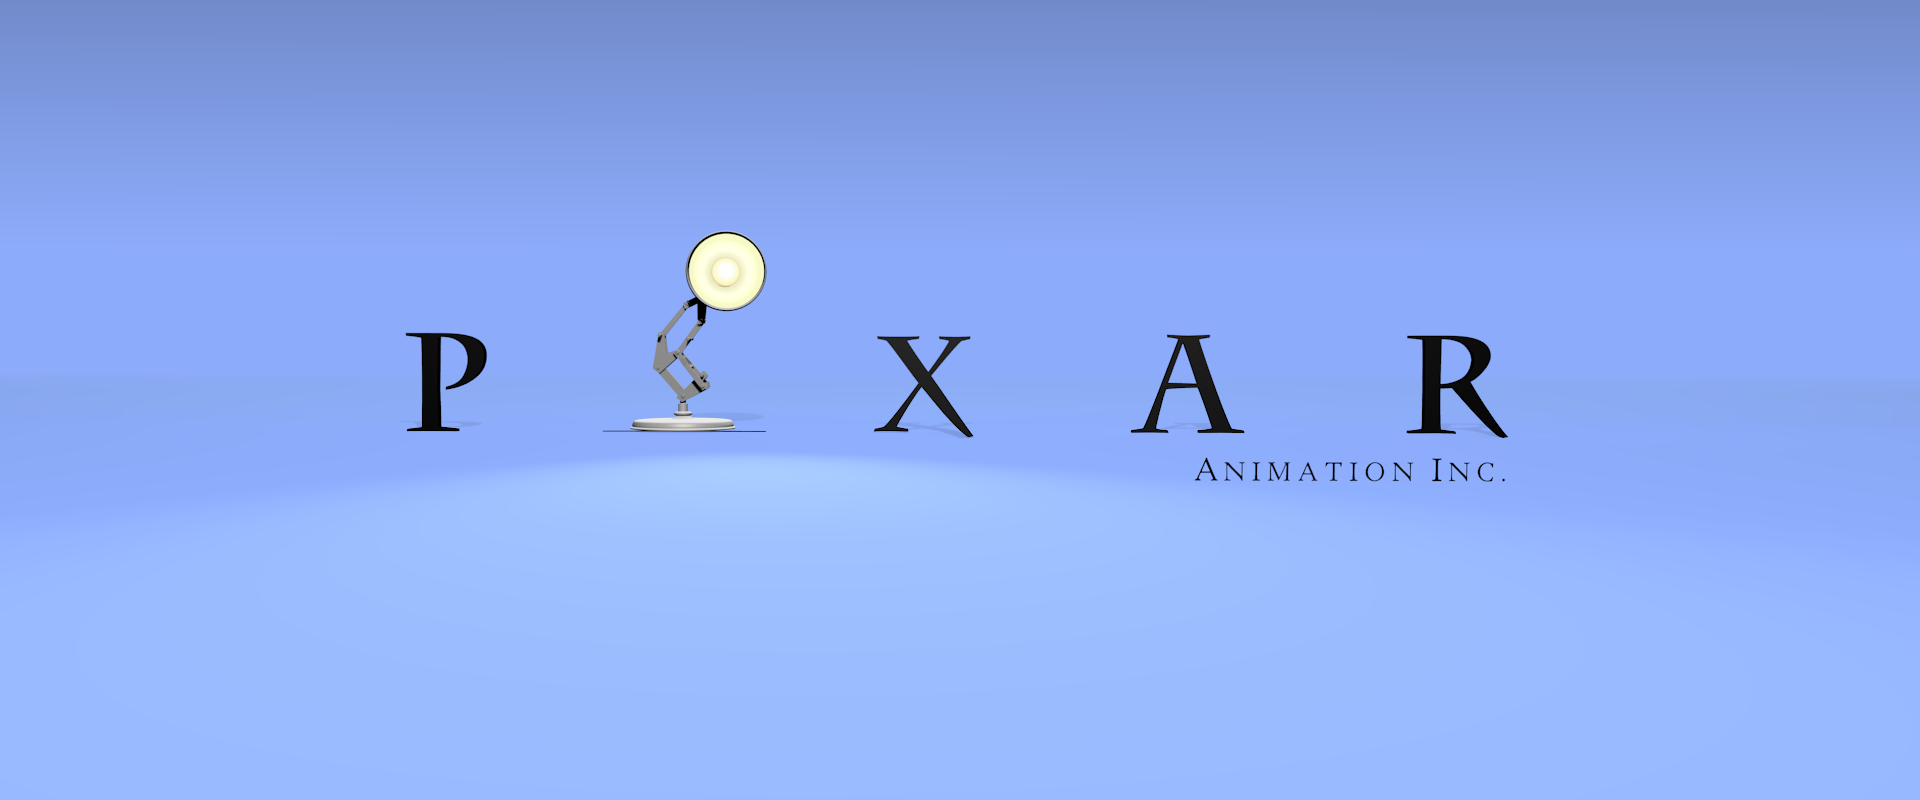 Pixar logo